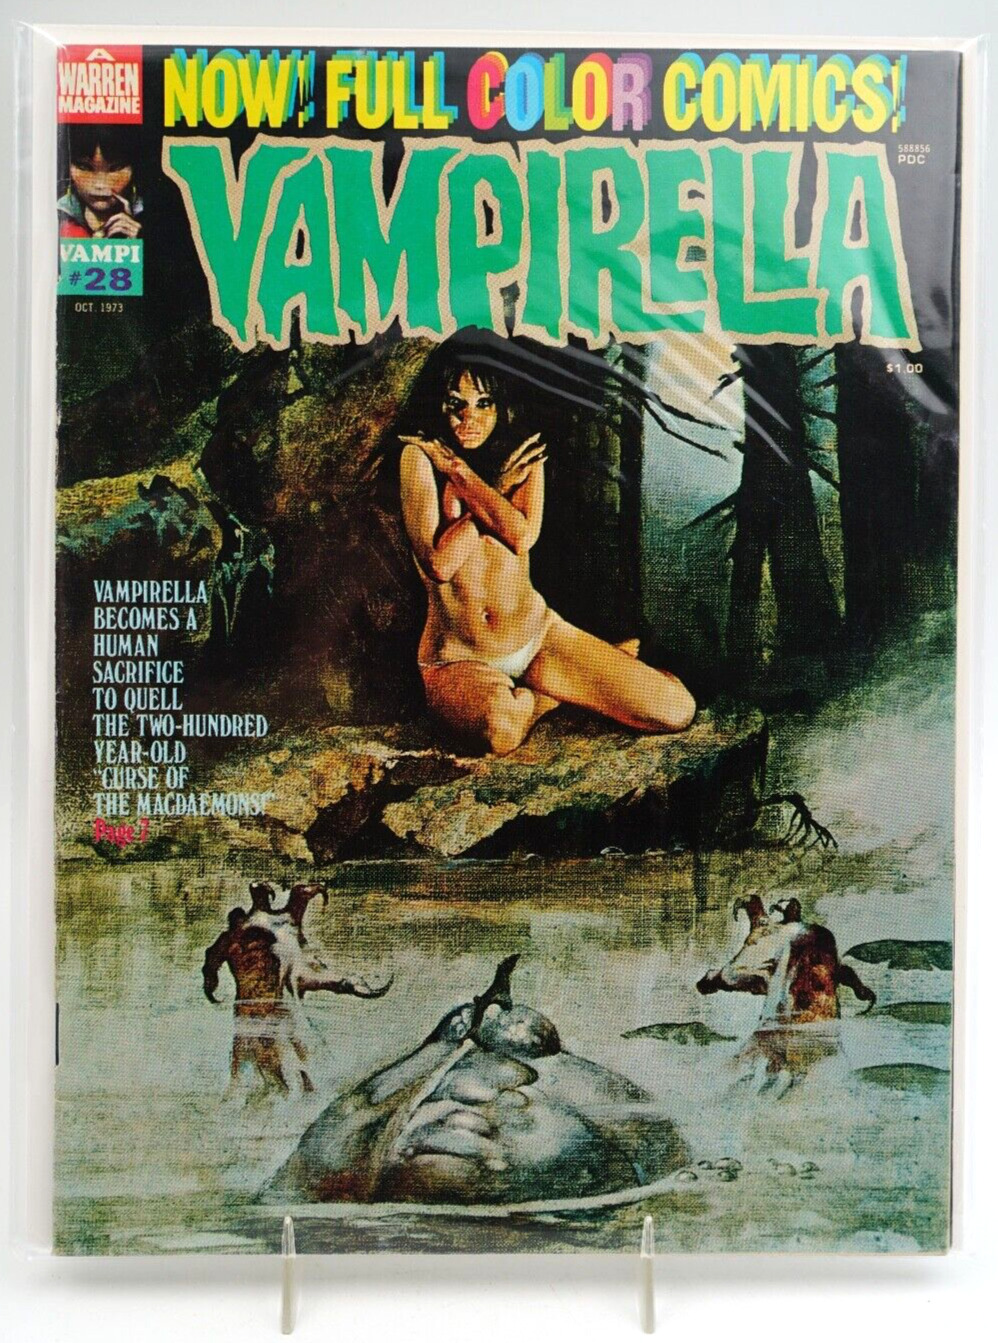 Vampirella #28 